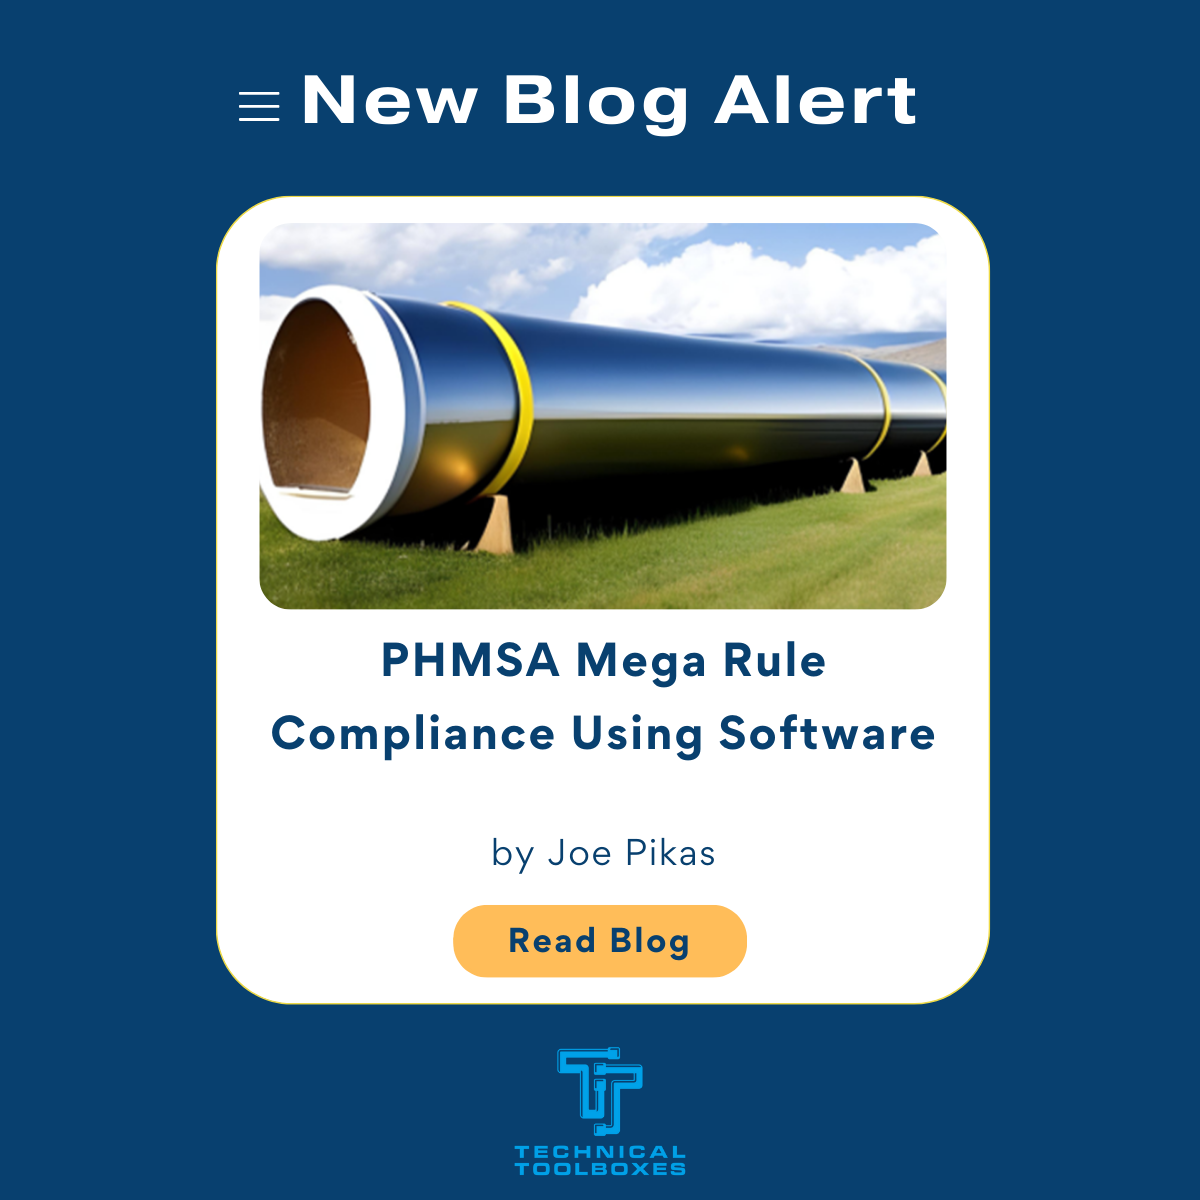 PHMSA Mega Rule Compliance Using Software Blog  Post